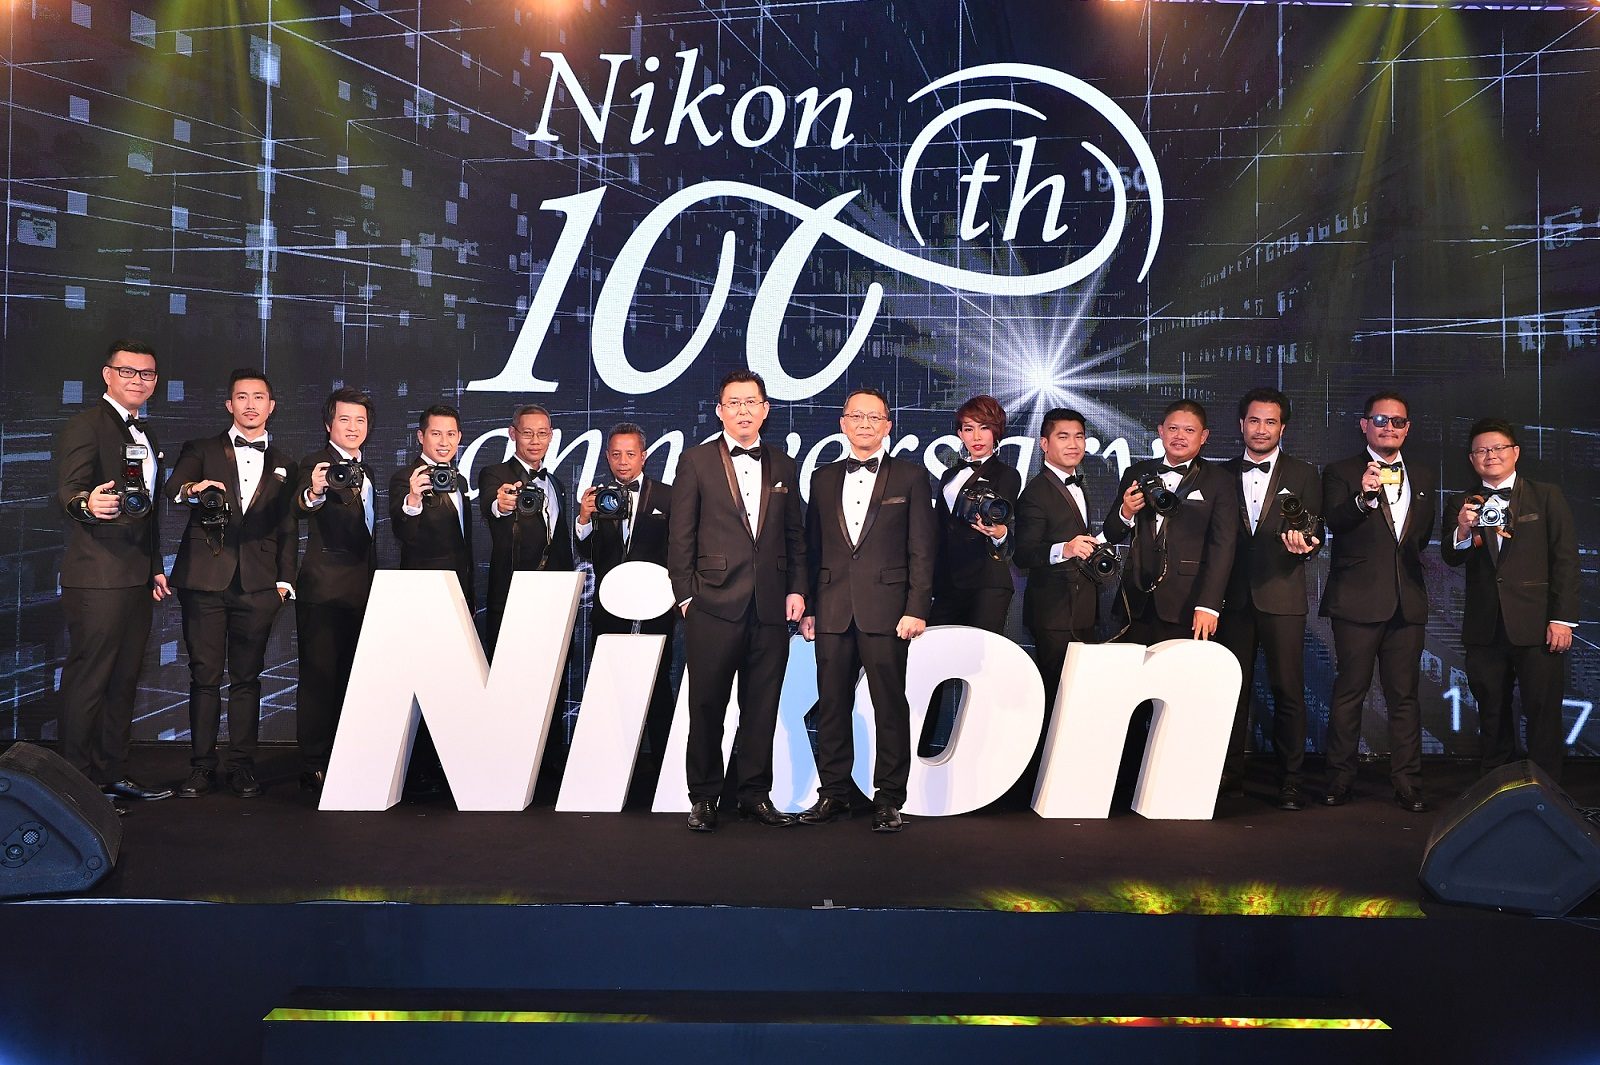 Nikon บริษัทผู้ผลิตกล้องและเลนส์เพียงรายเดียวของโลกที่ดำเนินการมาครบ 100 ปี ฉลองครบหนึ่งศตวรรษ!